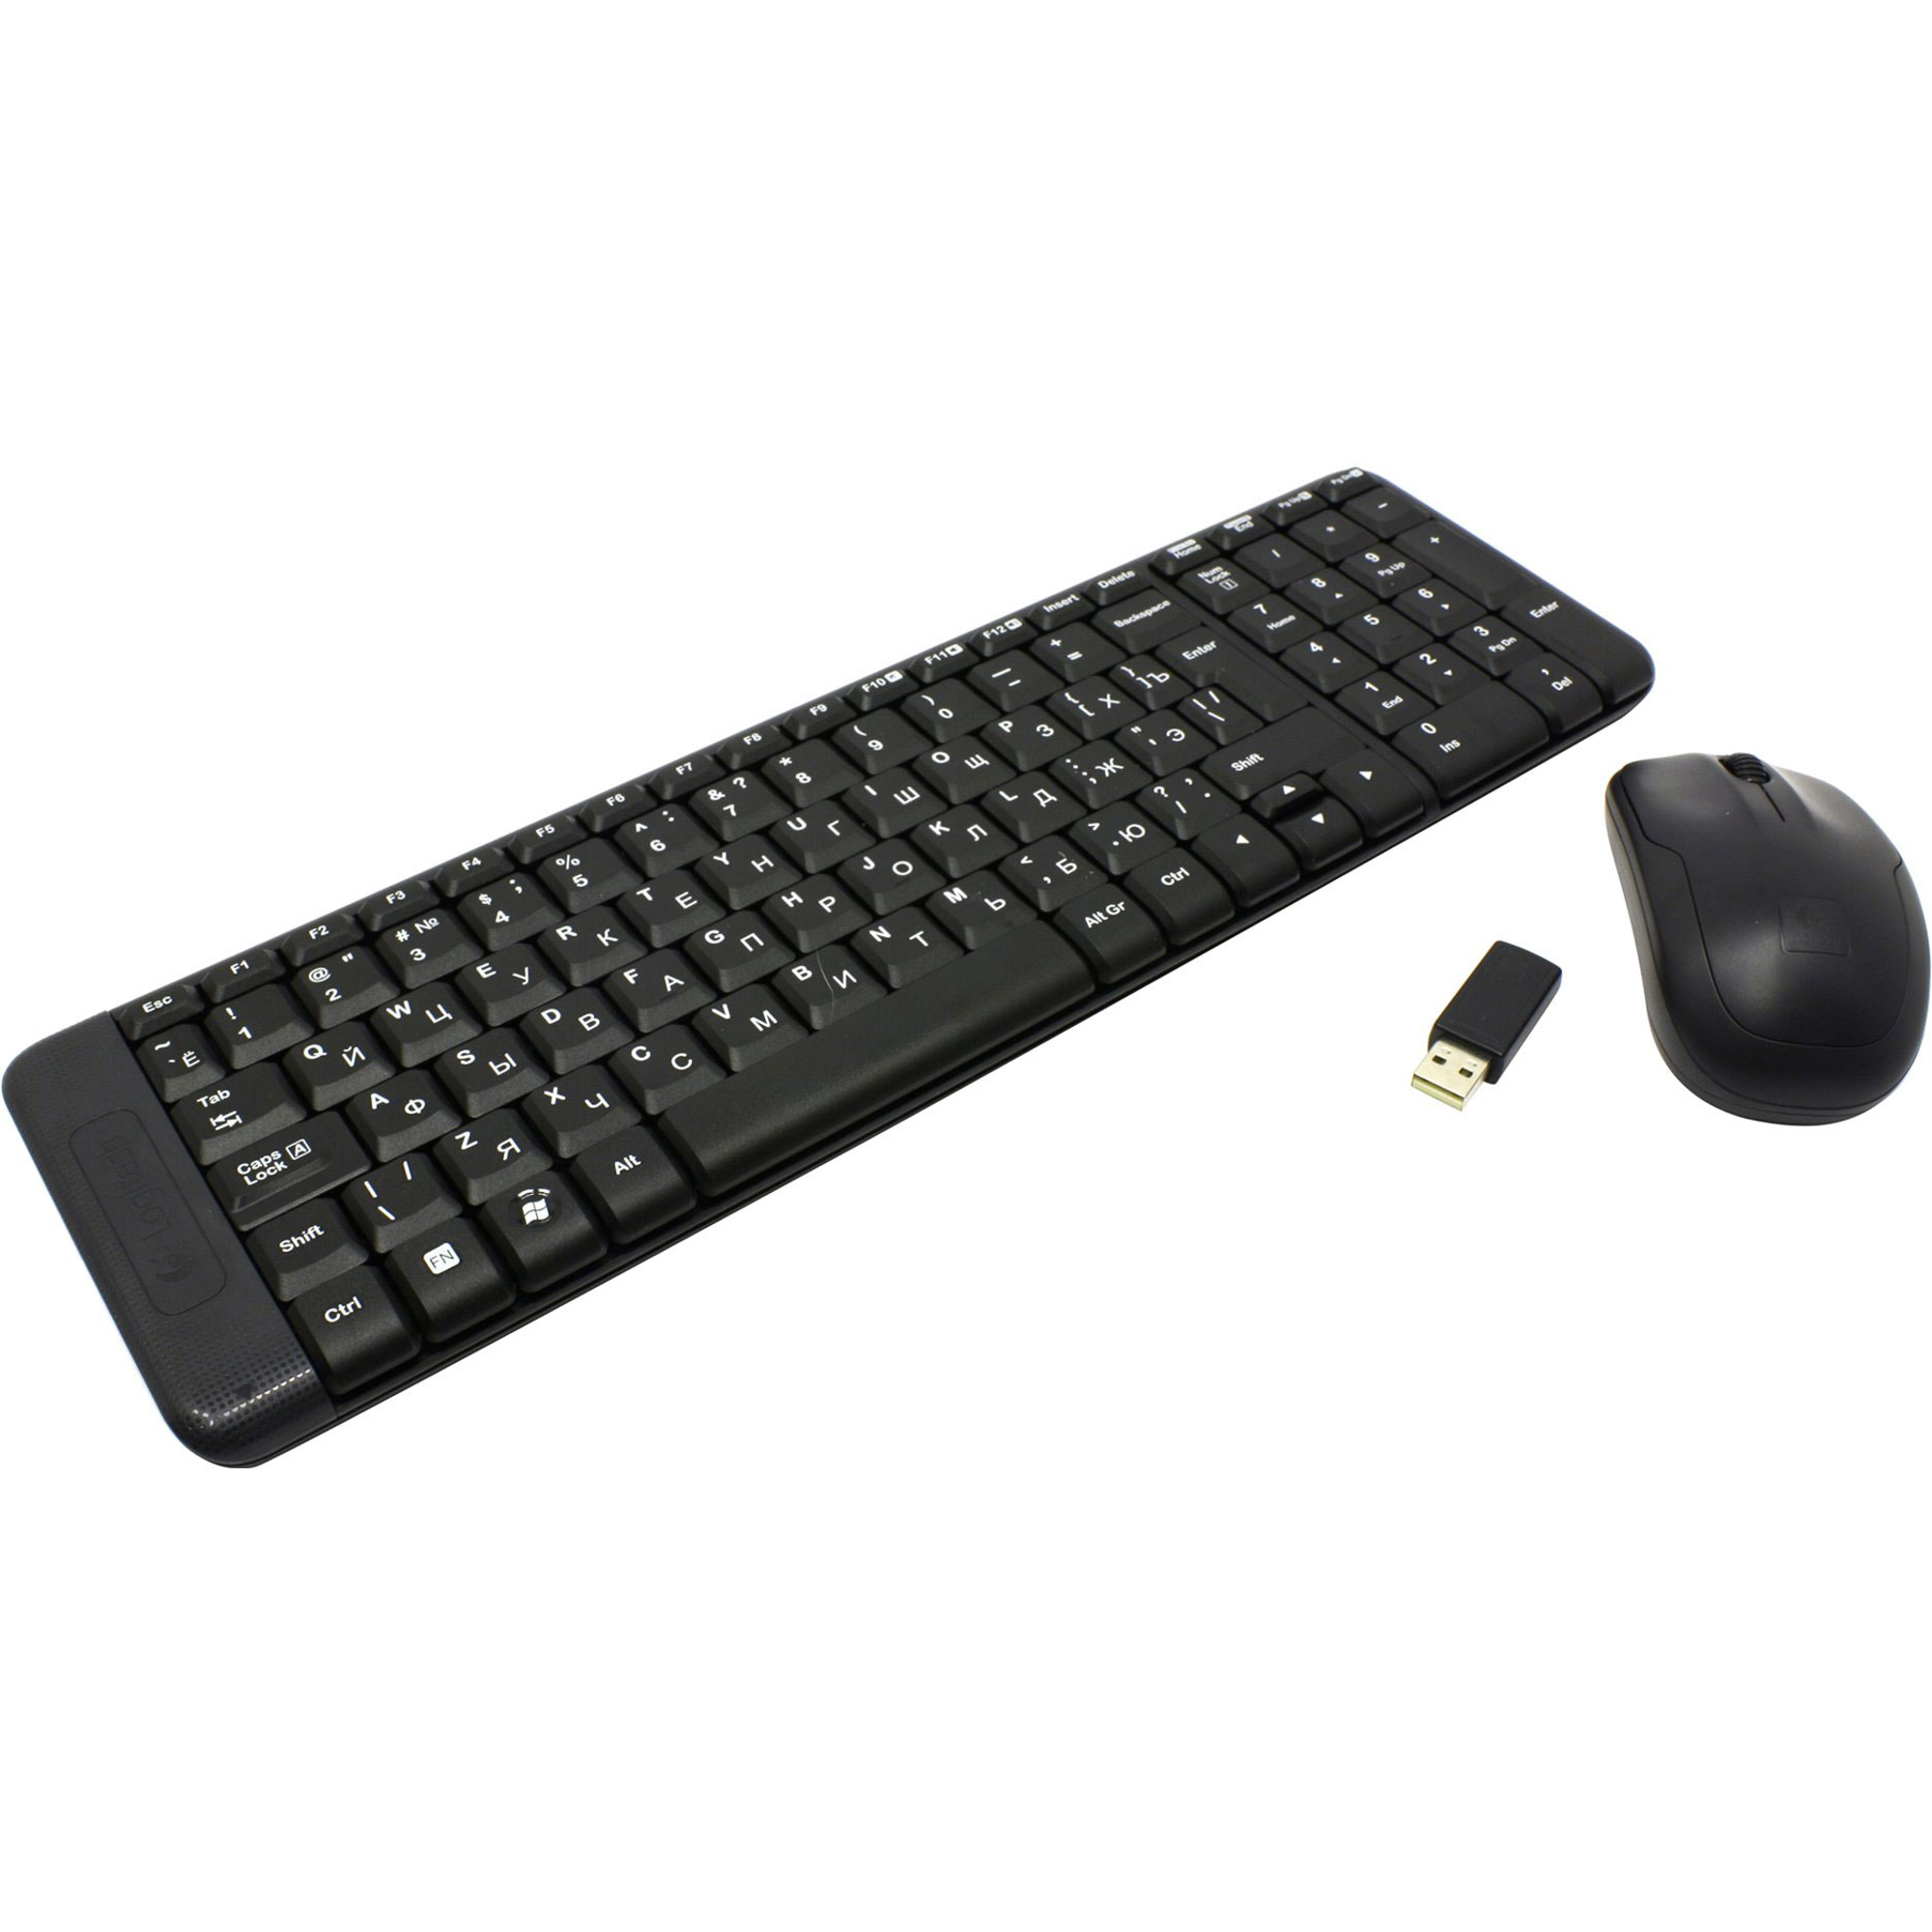 Комплект клавиатура + мышь Logitech Wireless Desktop MK220 logitech комплект мышь клавиатура беспроводная logitech mk270 черный